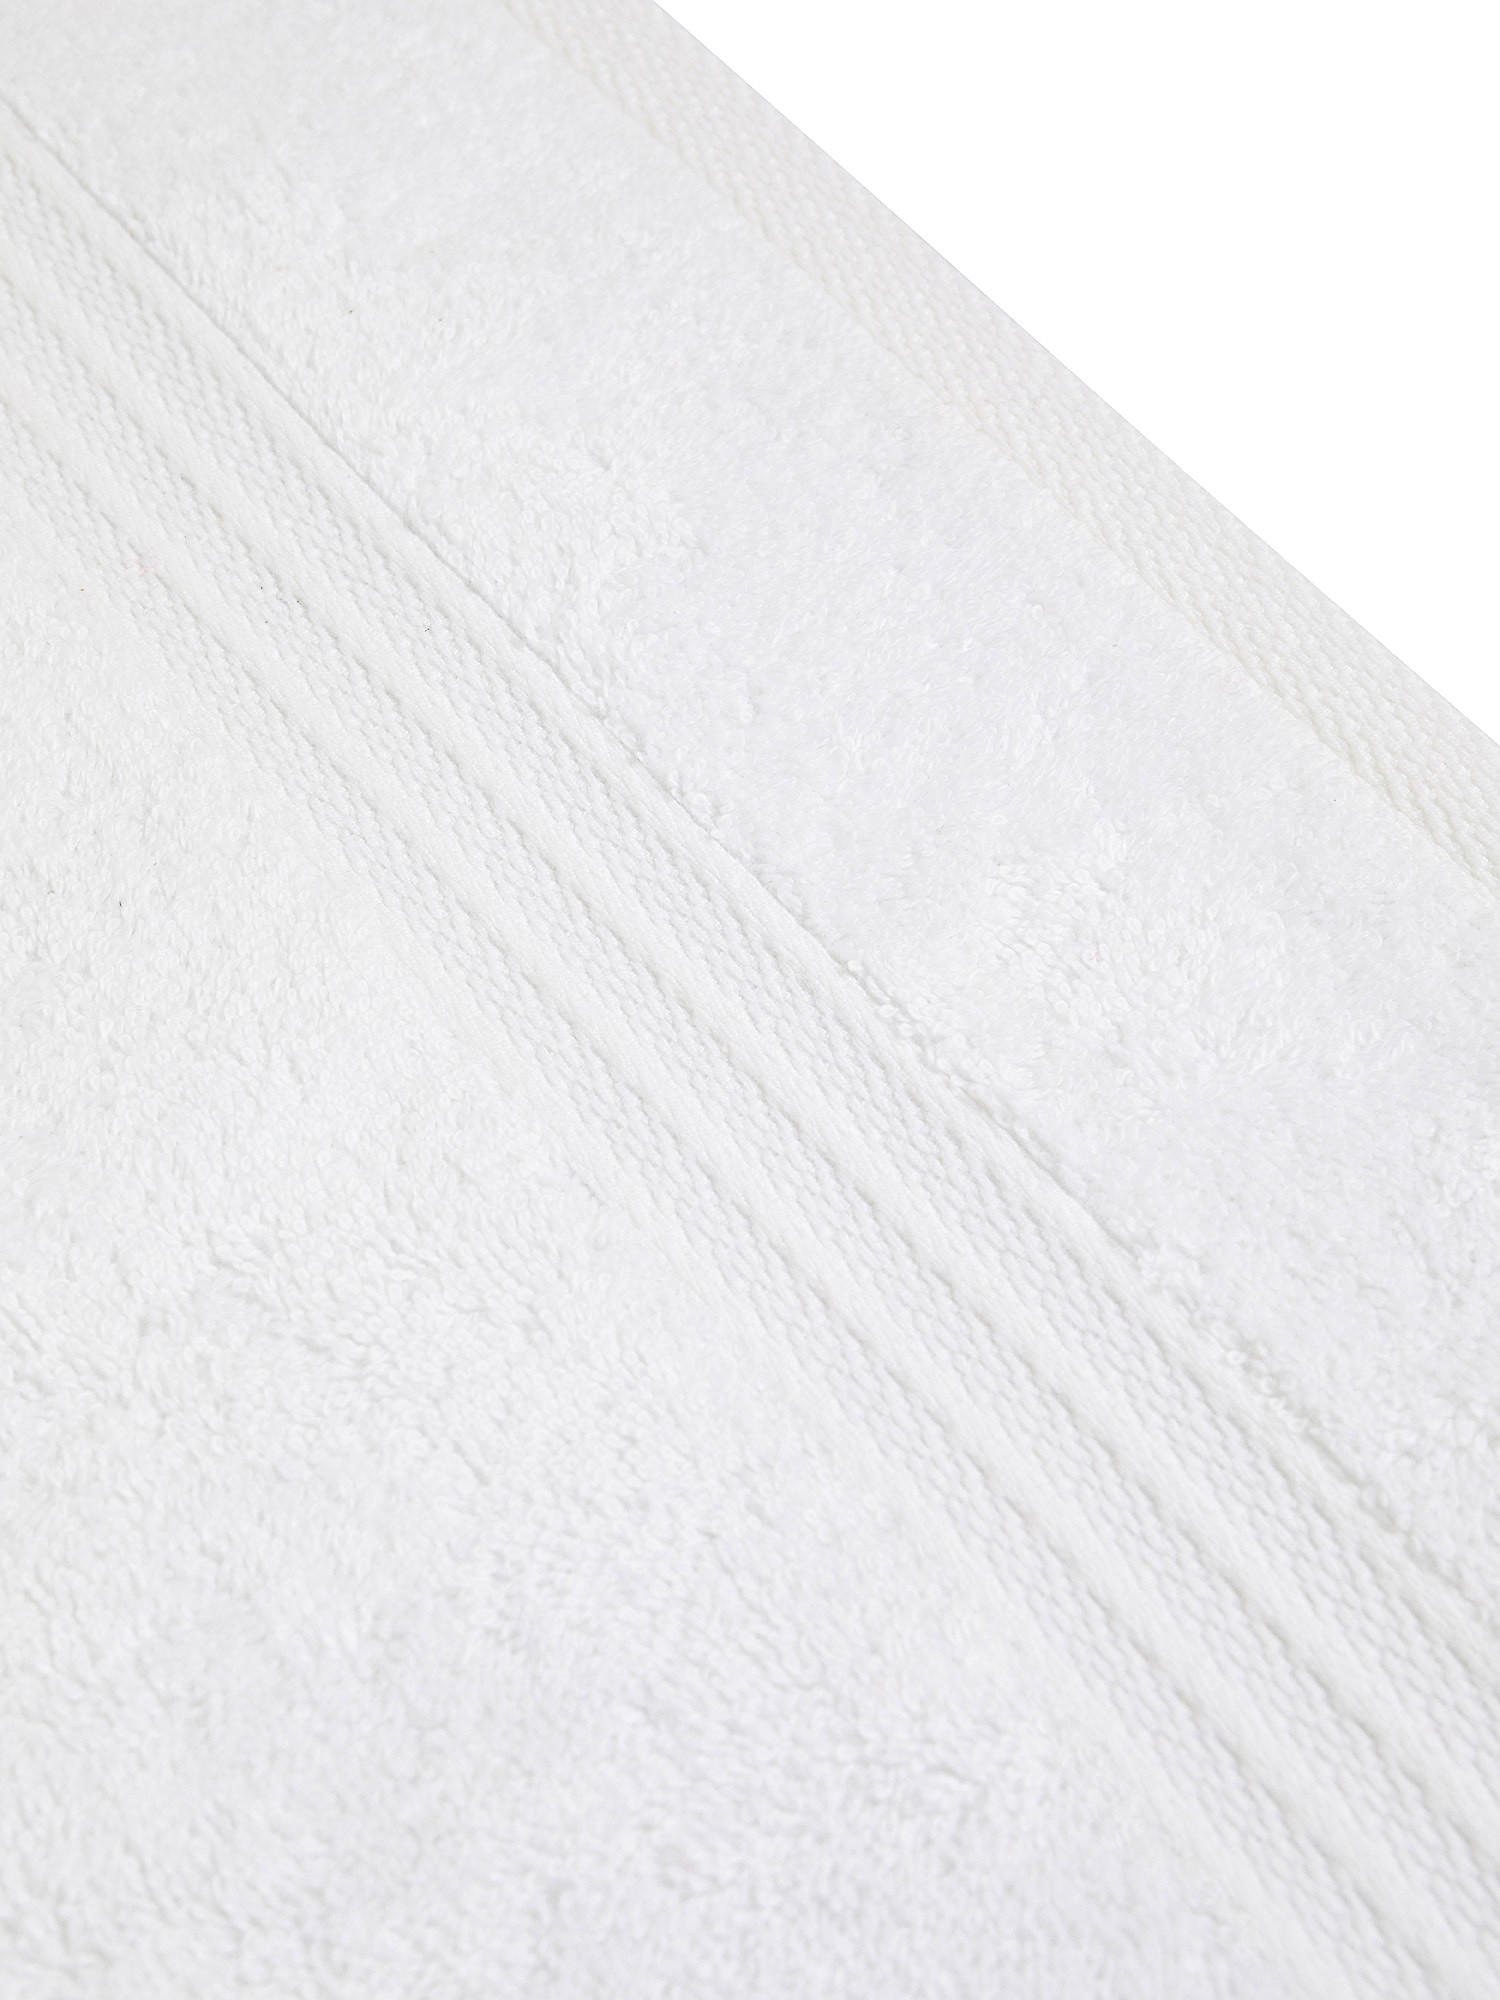 Asciugamano puro cotone tinta unita Zefiro, Bianco, large image number 2